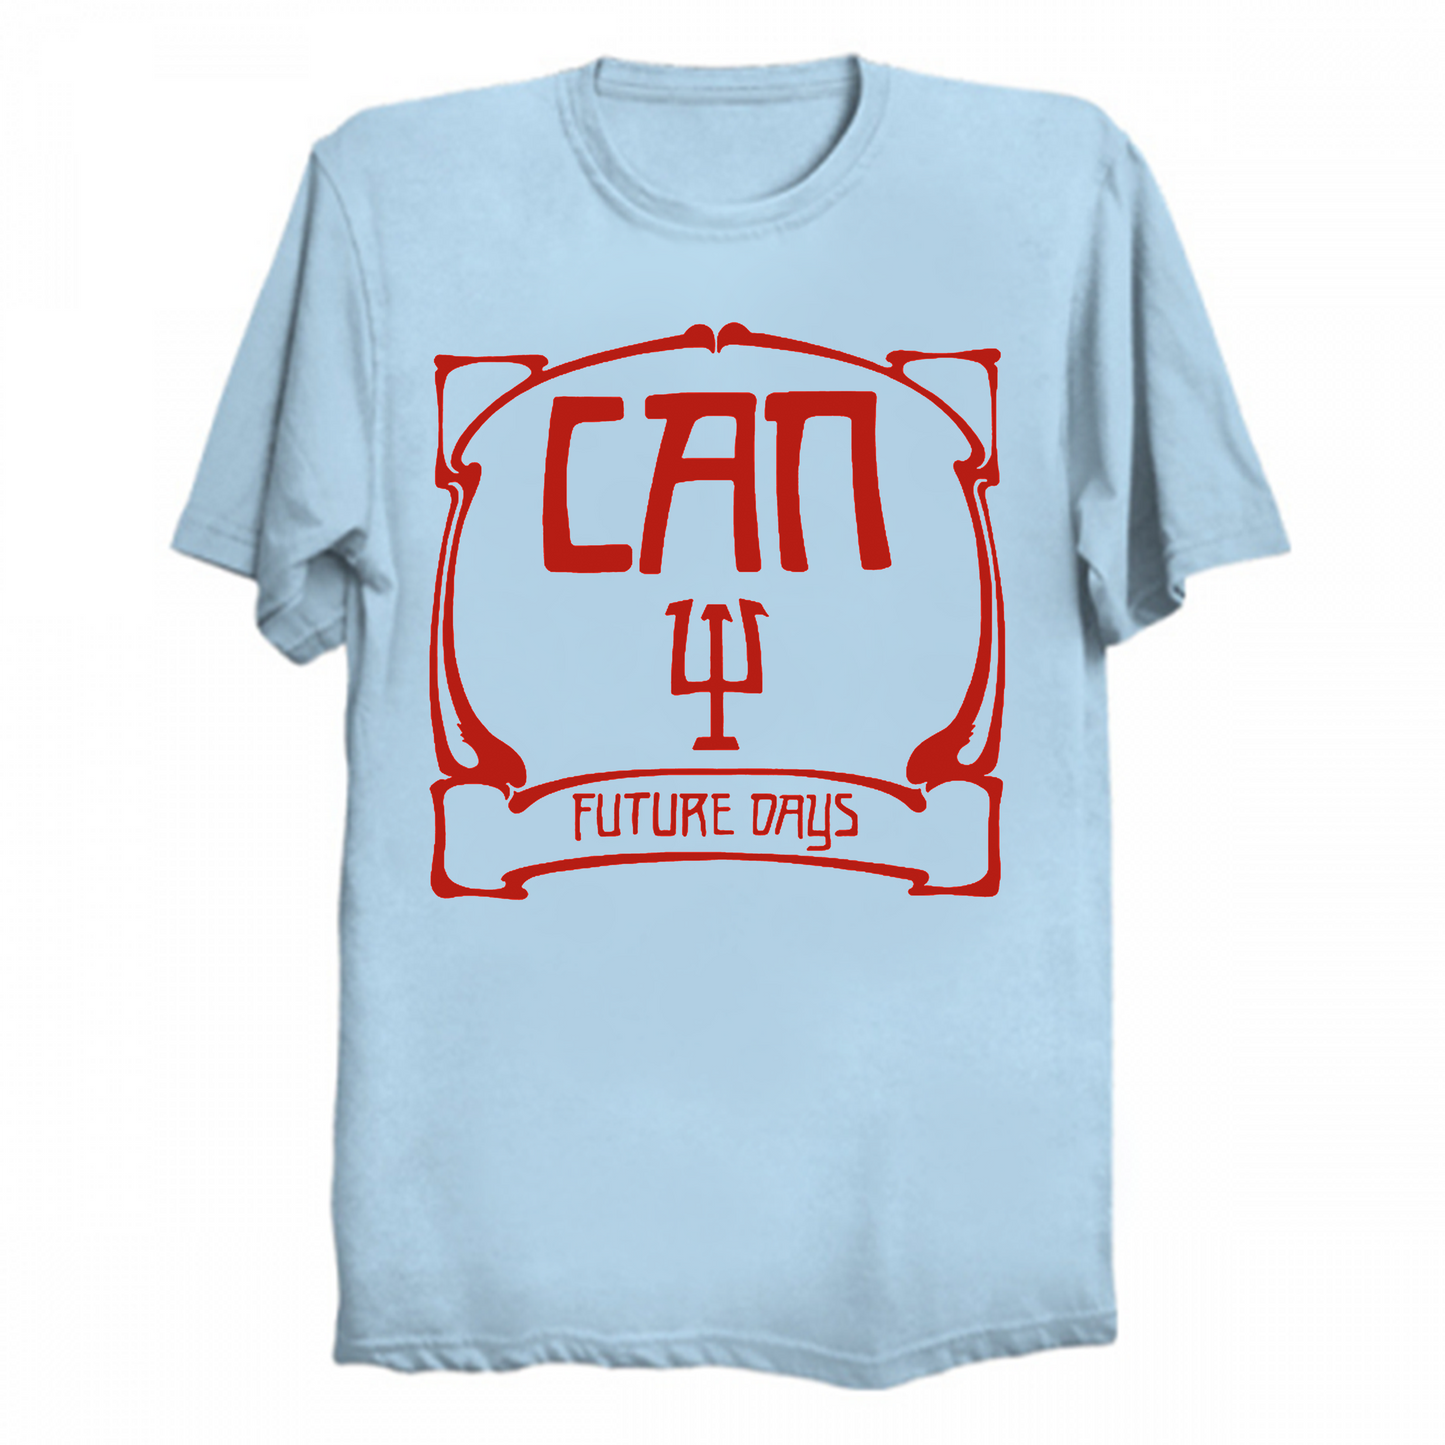 Can 'Future Days' T-Shirt (various colors)